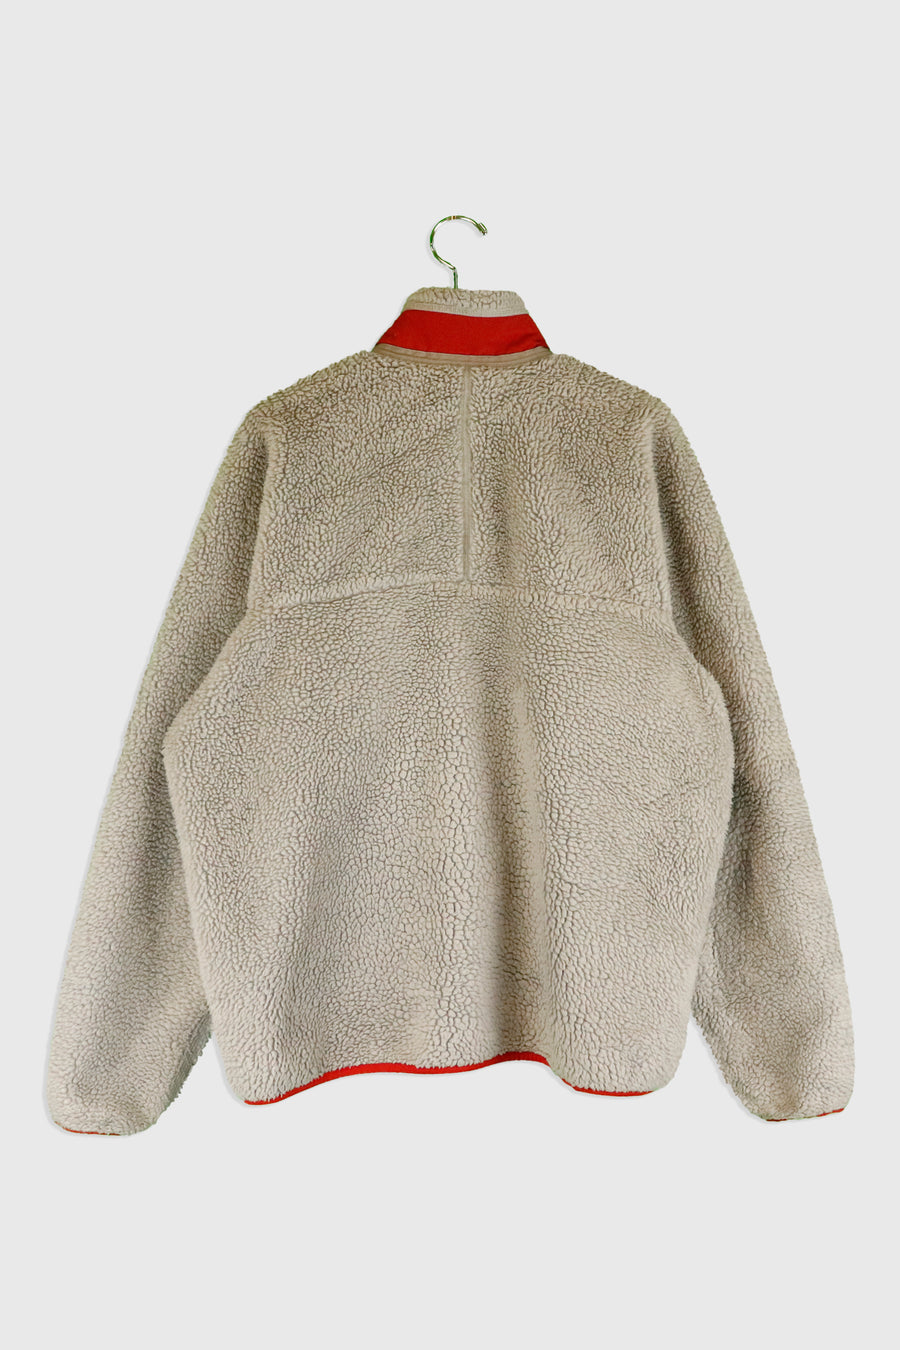 Vintage Patagonia Full Zip Fuzzy Three Pockets Jacket Sz XL